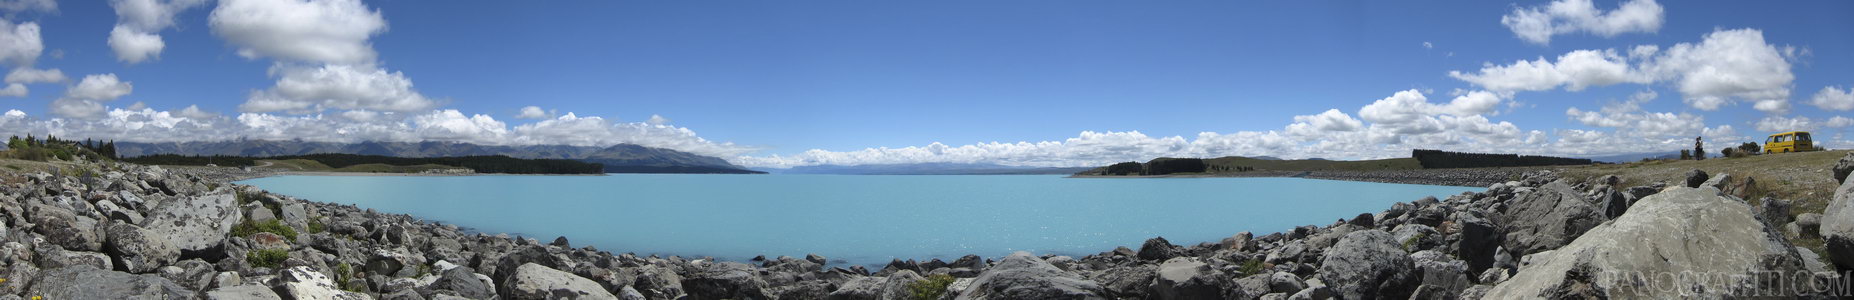 Mount Cook Across A Bright Blue Lake Pukaki - Stitched Panorama